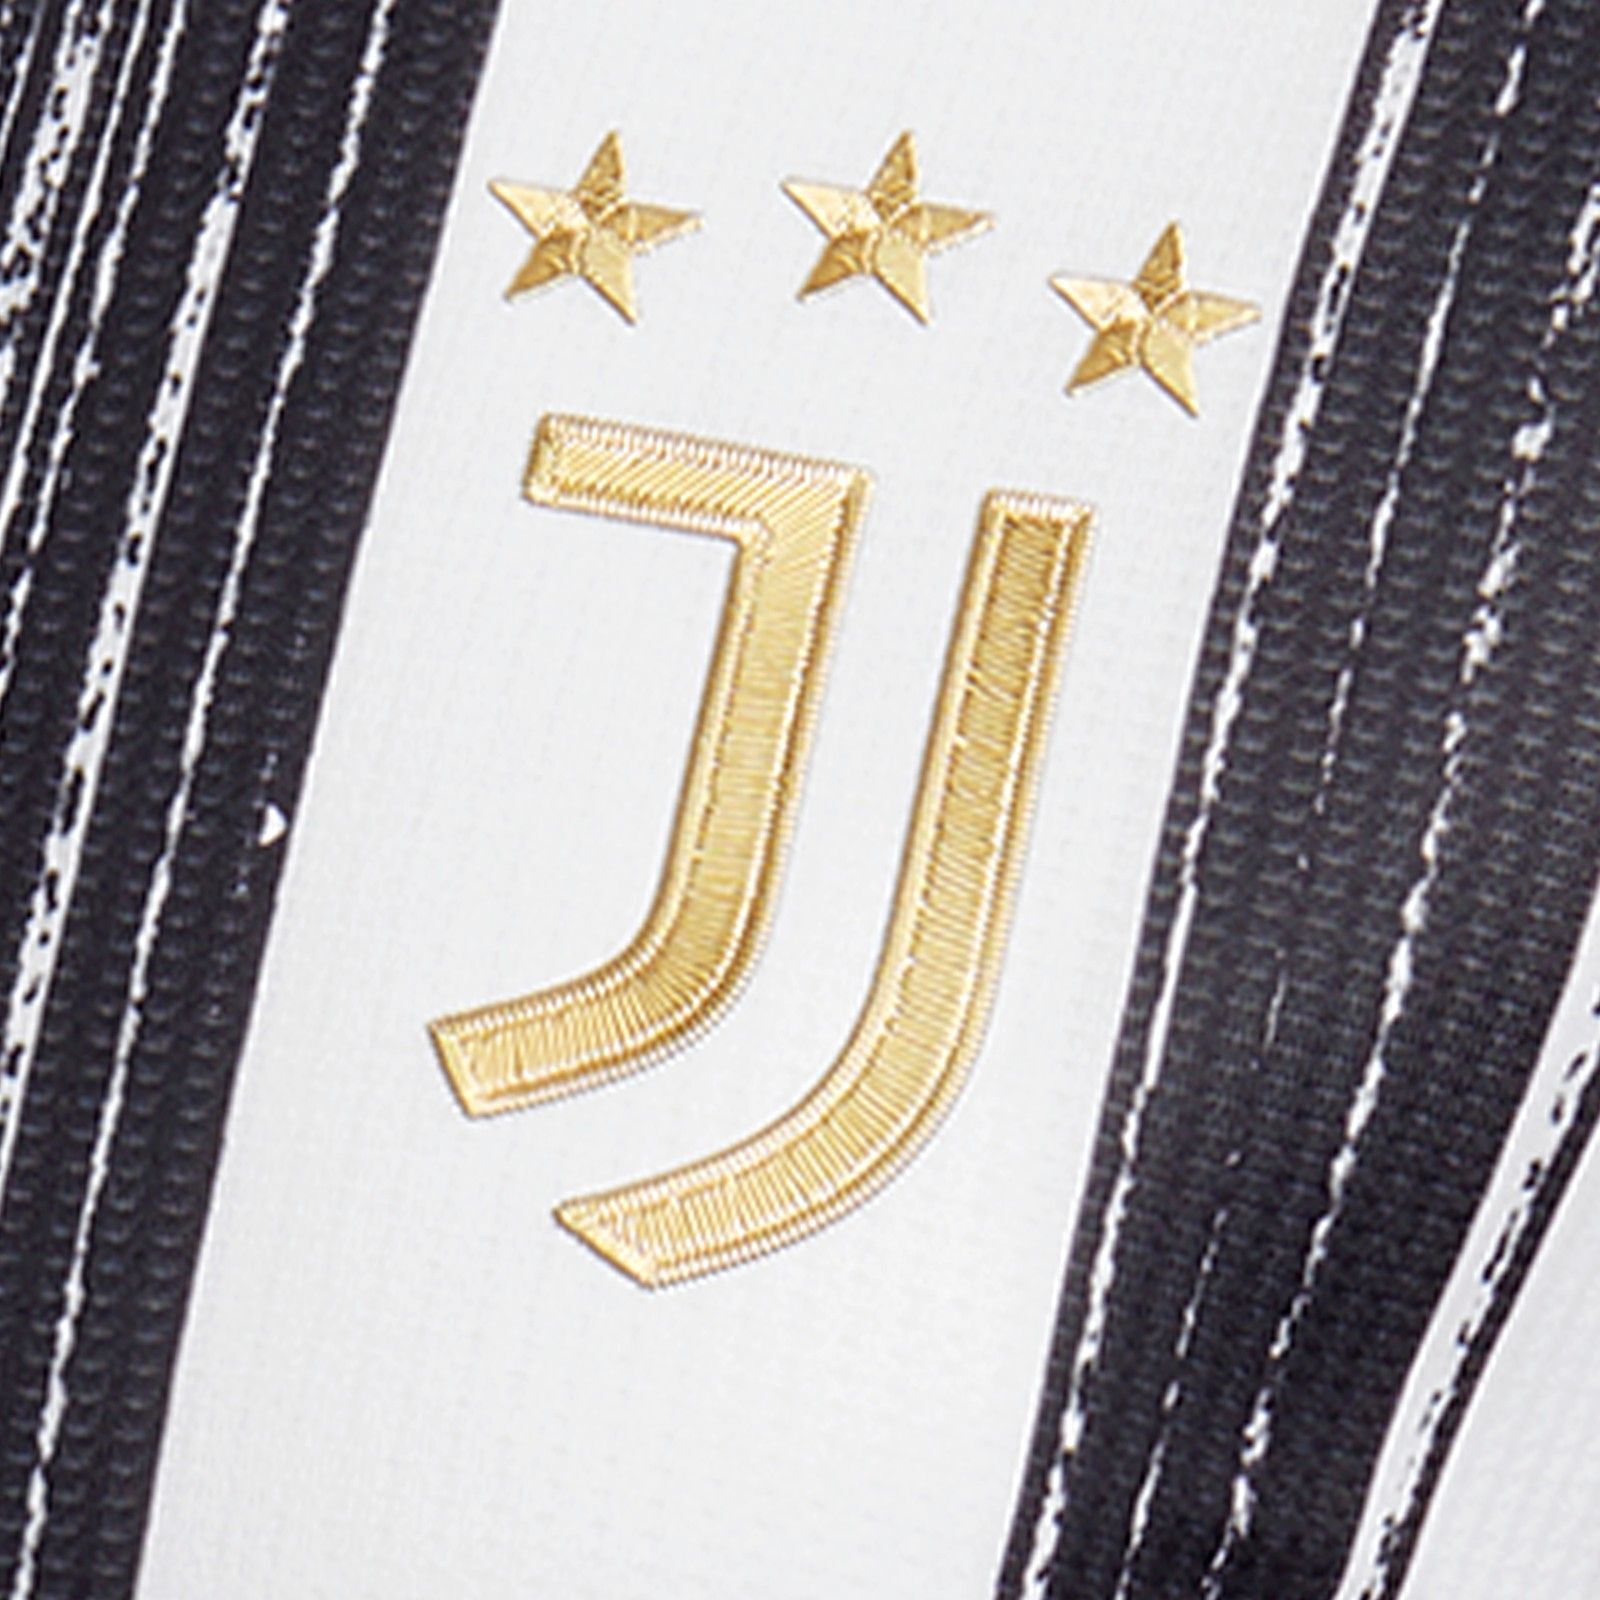 Juventus thuisshirt seizoen 2020/2021